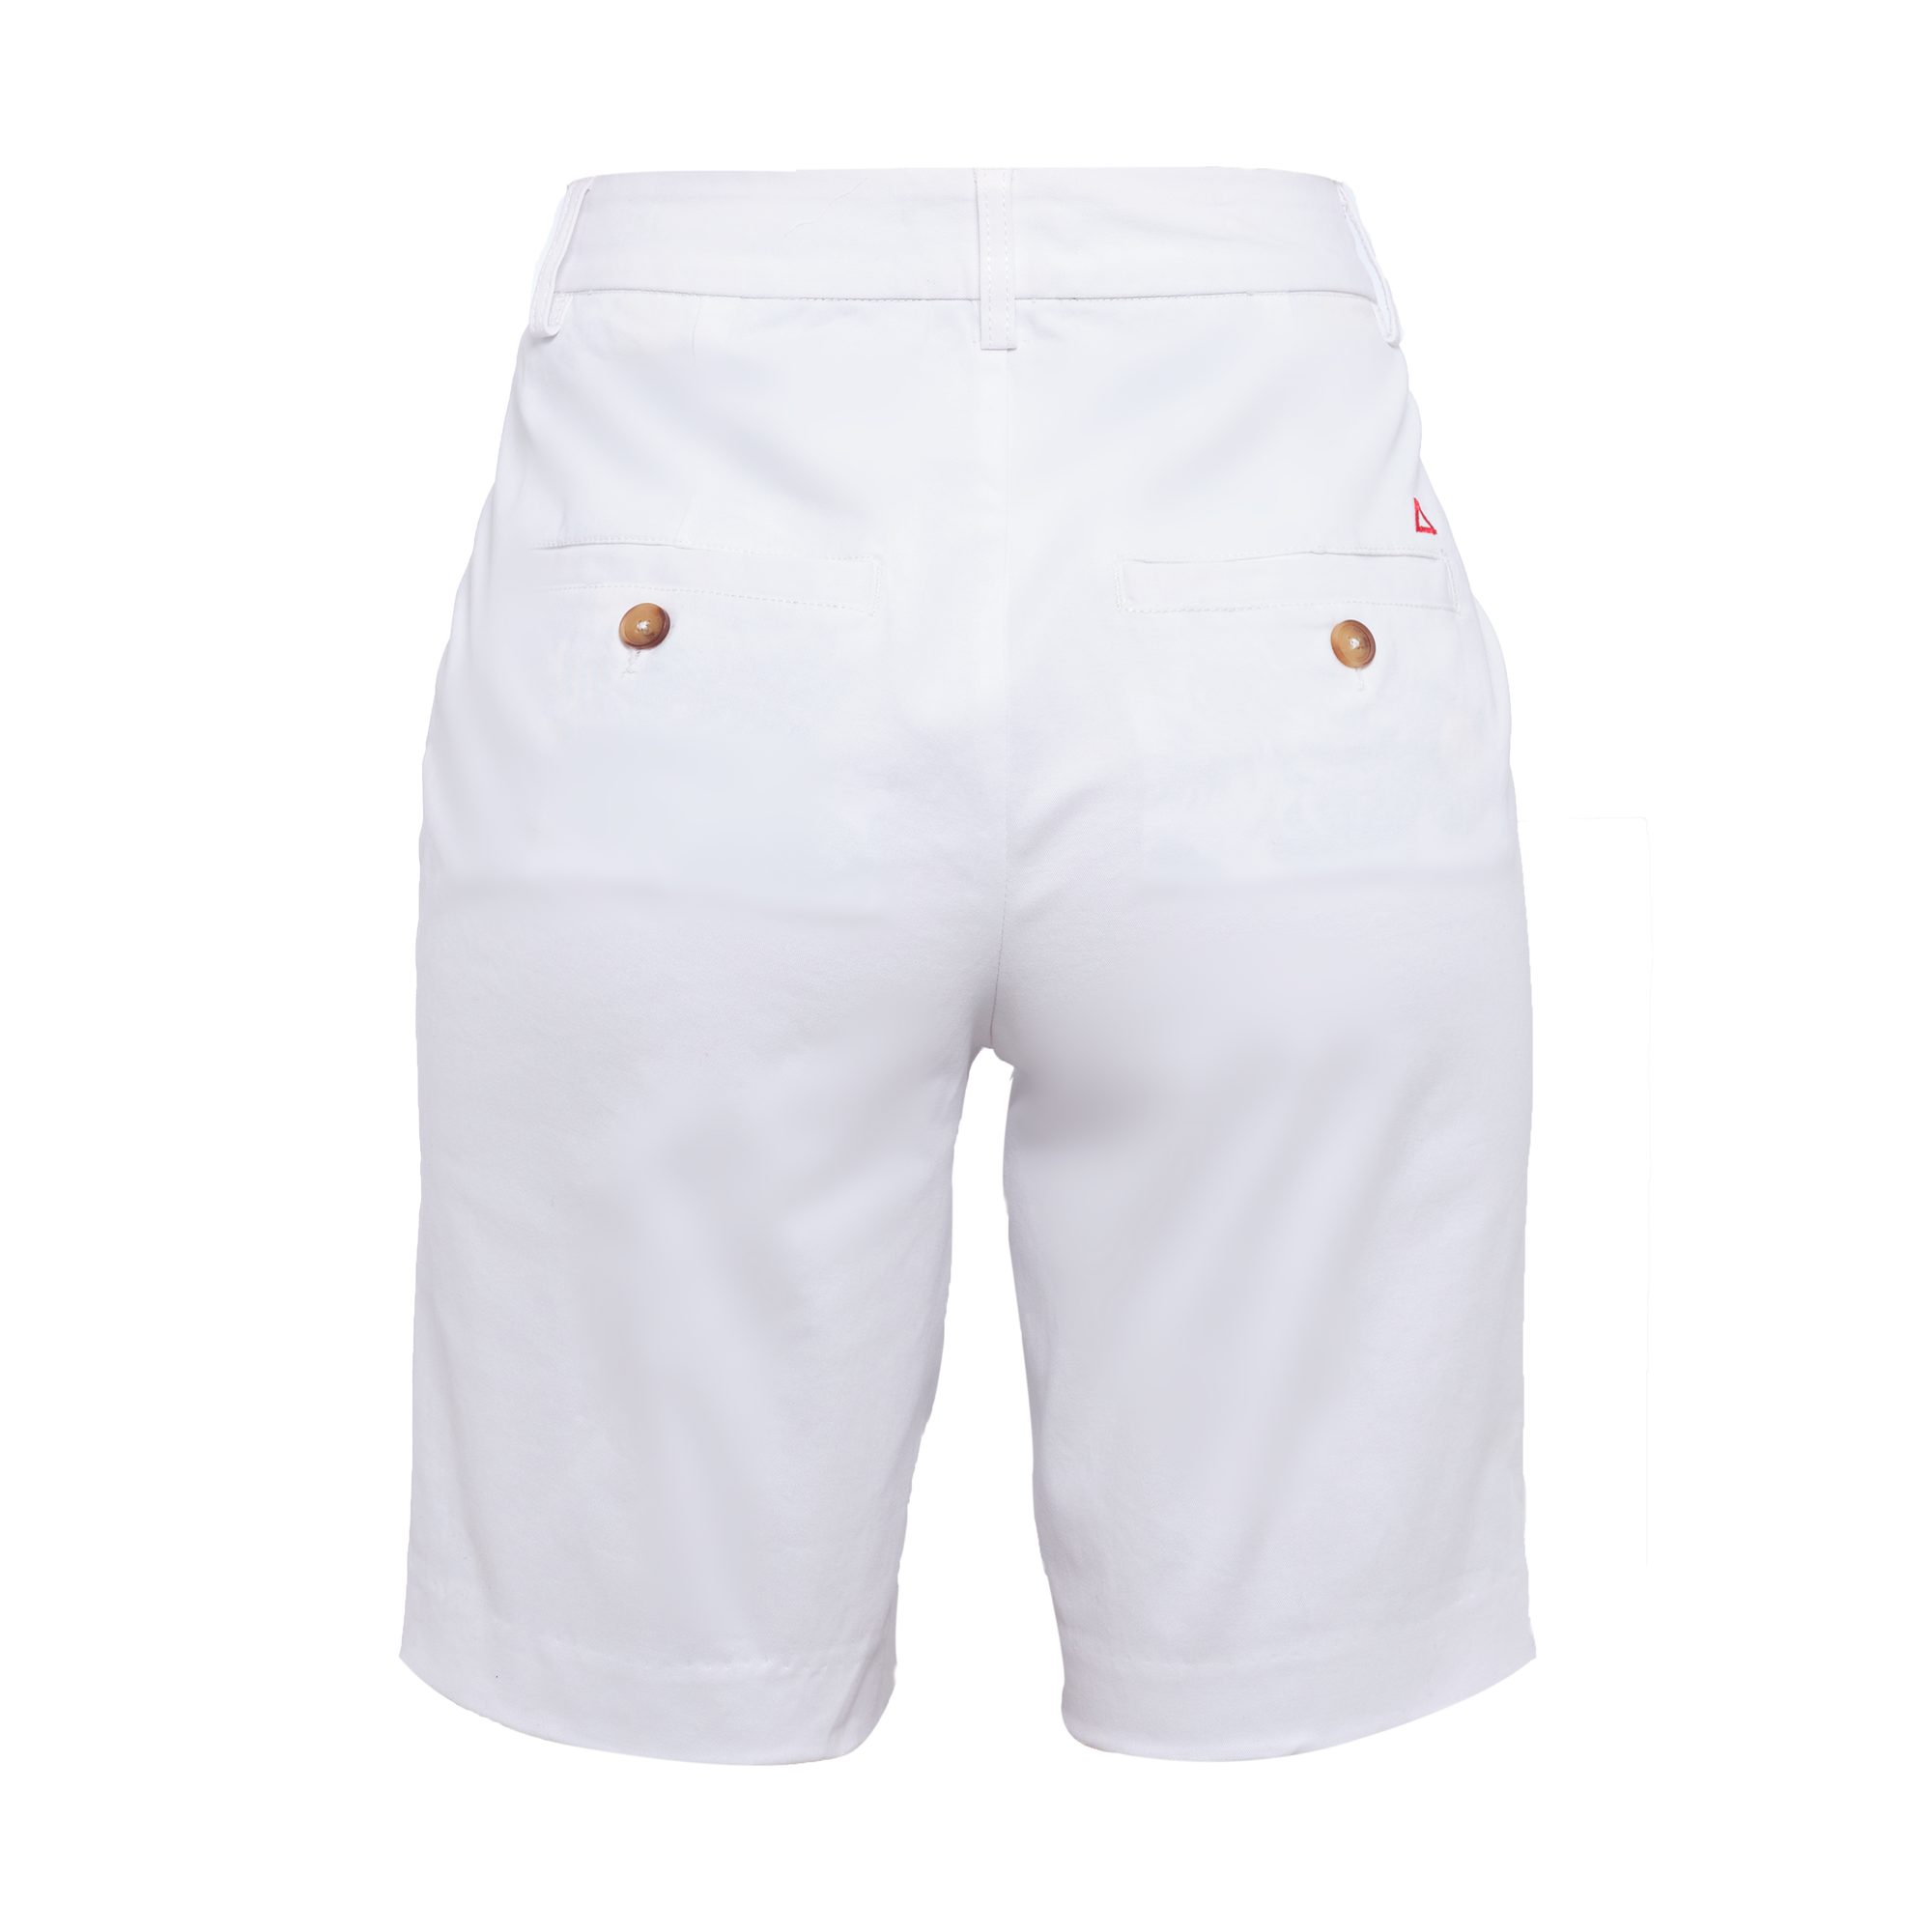 TABS womens 9" Bermuda shorts - Longtail White